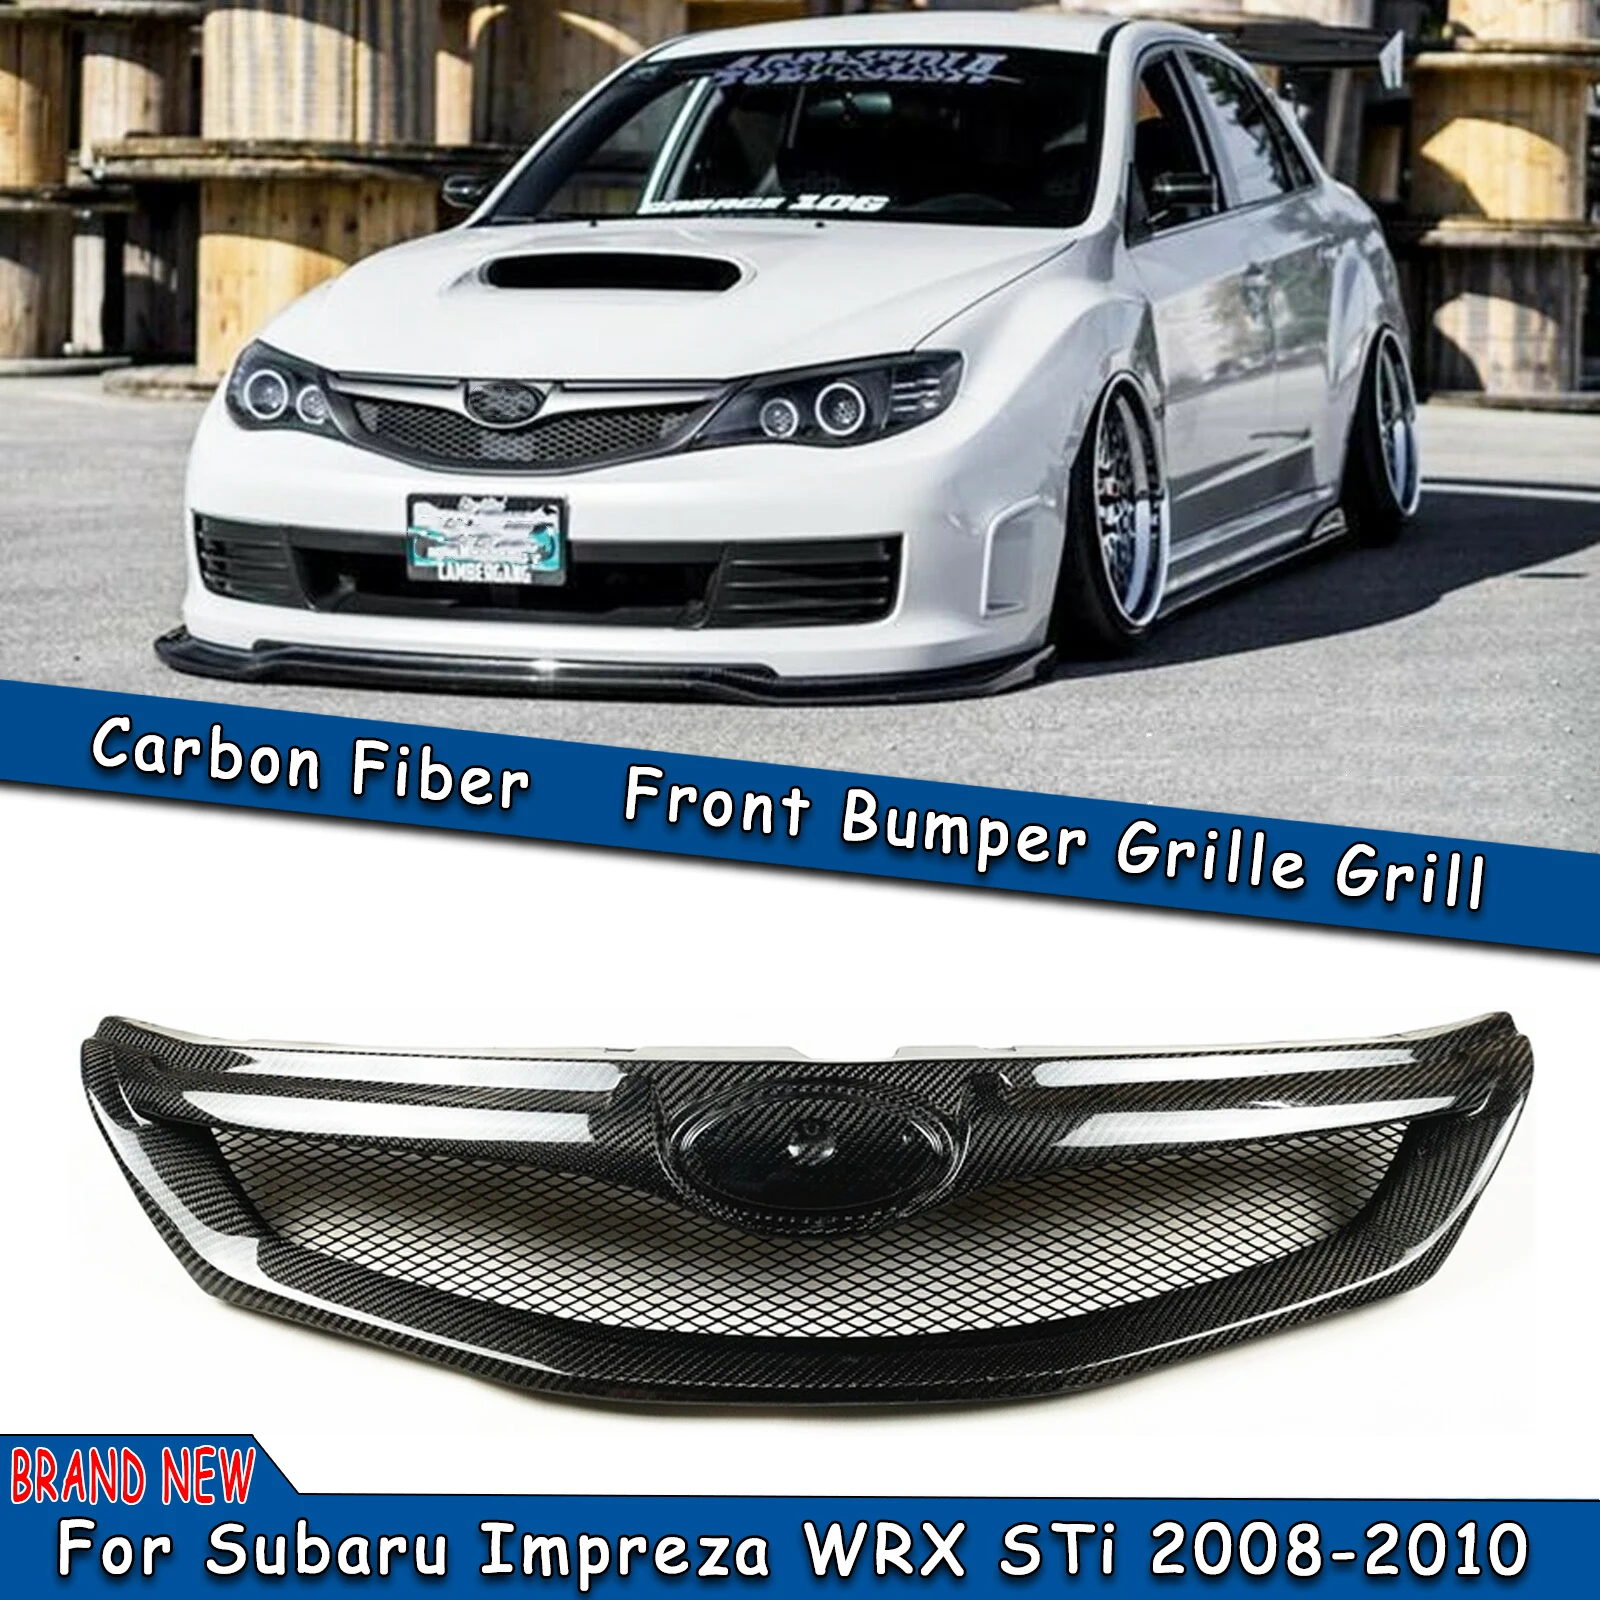 

Real Carbon Fiber Car Front Grille Grills Upper Replacement Bumper Hood Mesh Grid Auto Kit For Subaru Impreza WRX STi 2008-2011